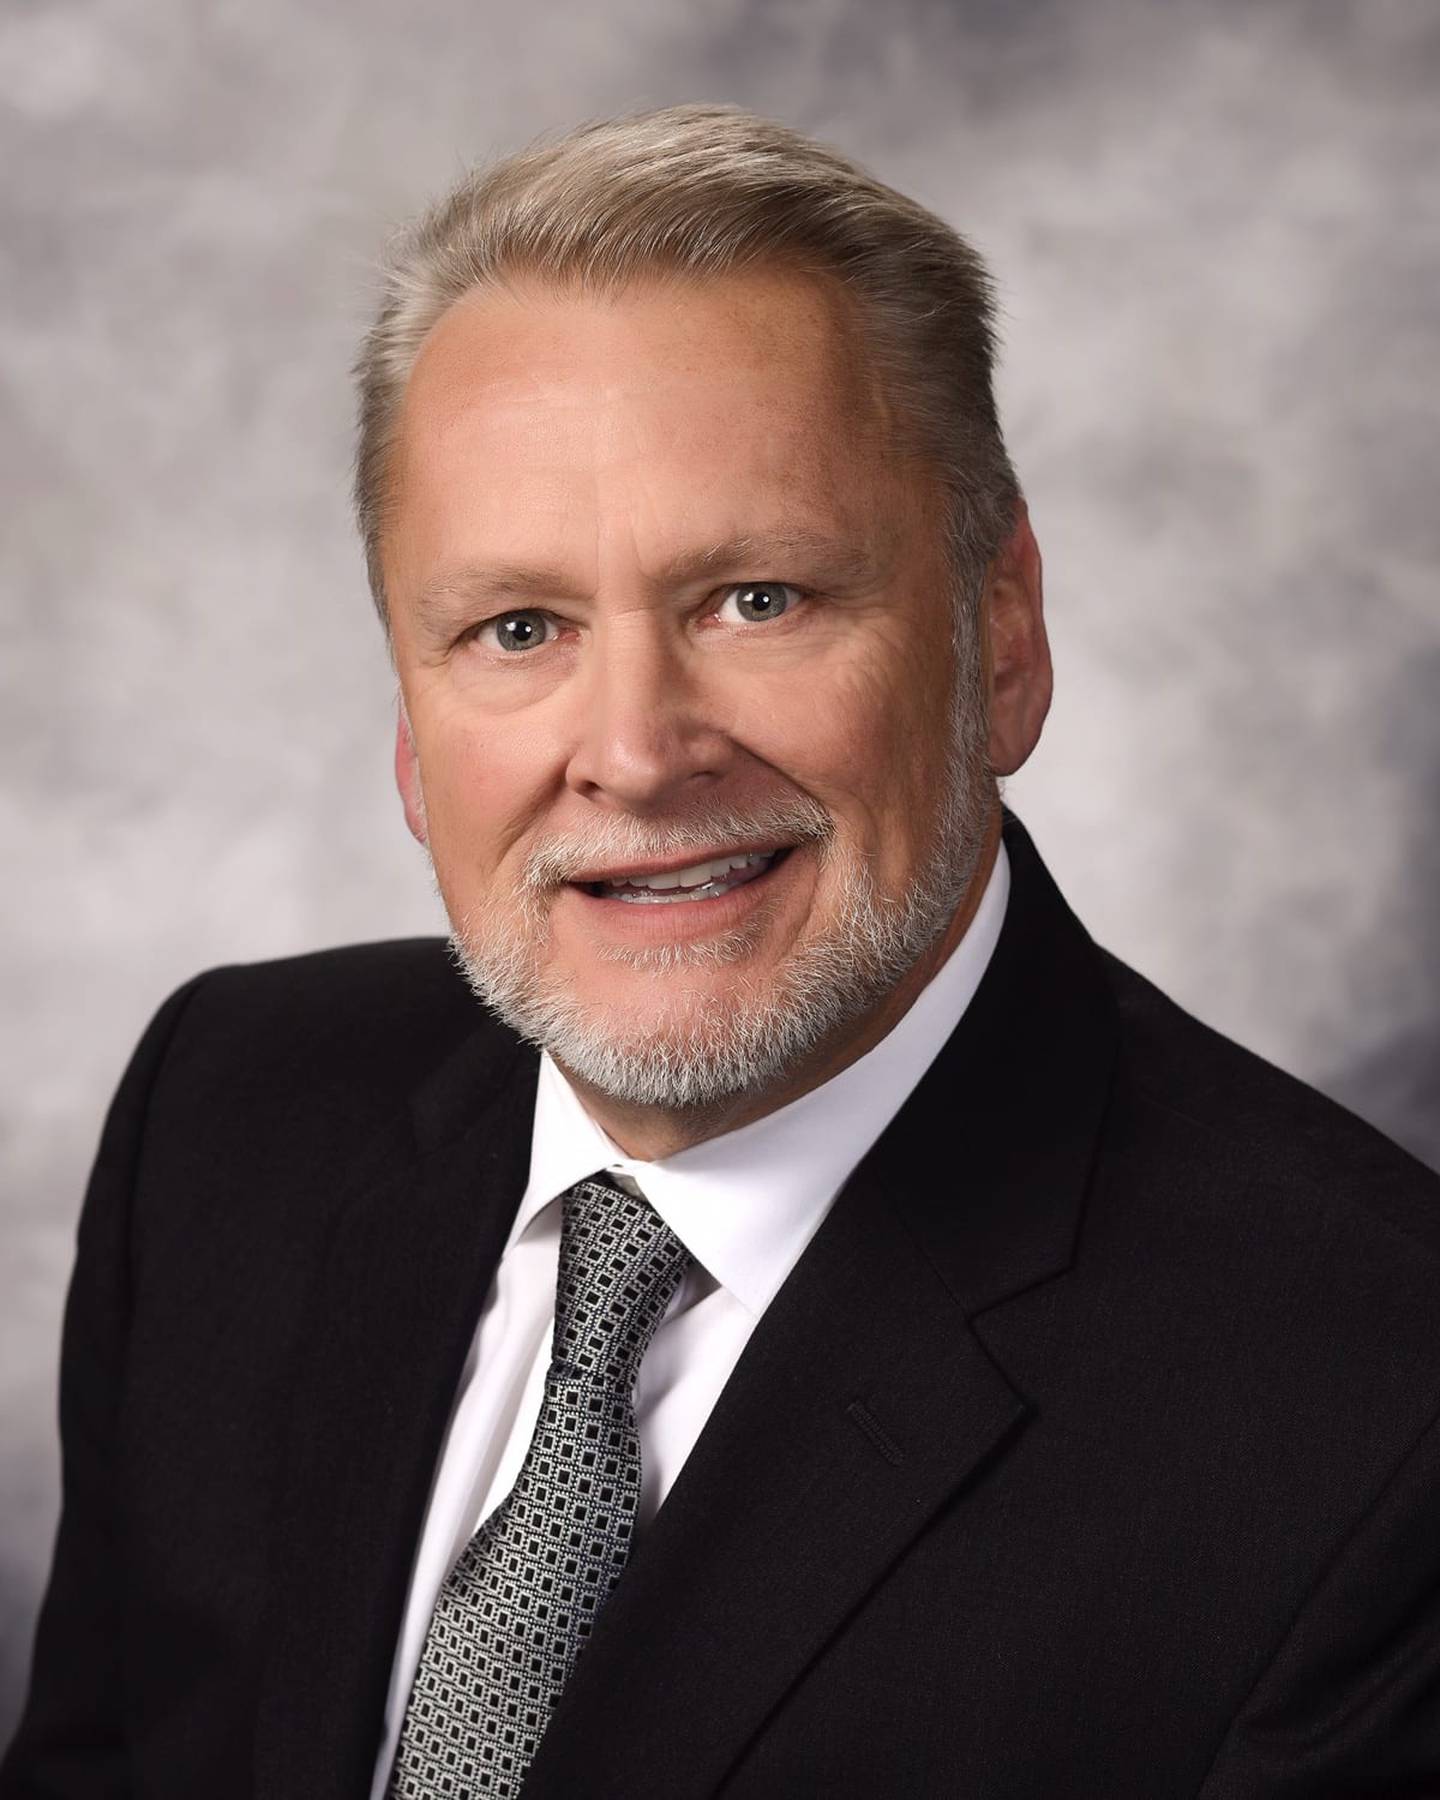 Scott Hullinger is the CEO of Silver Oaks Behavioral Hospital in New Lenox.